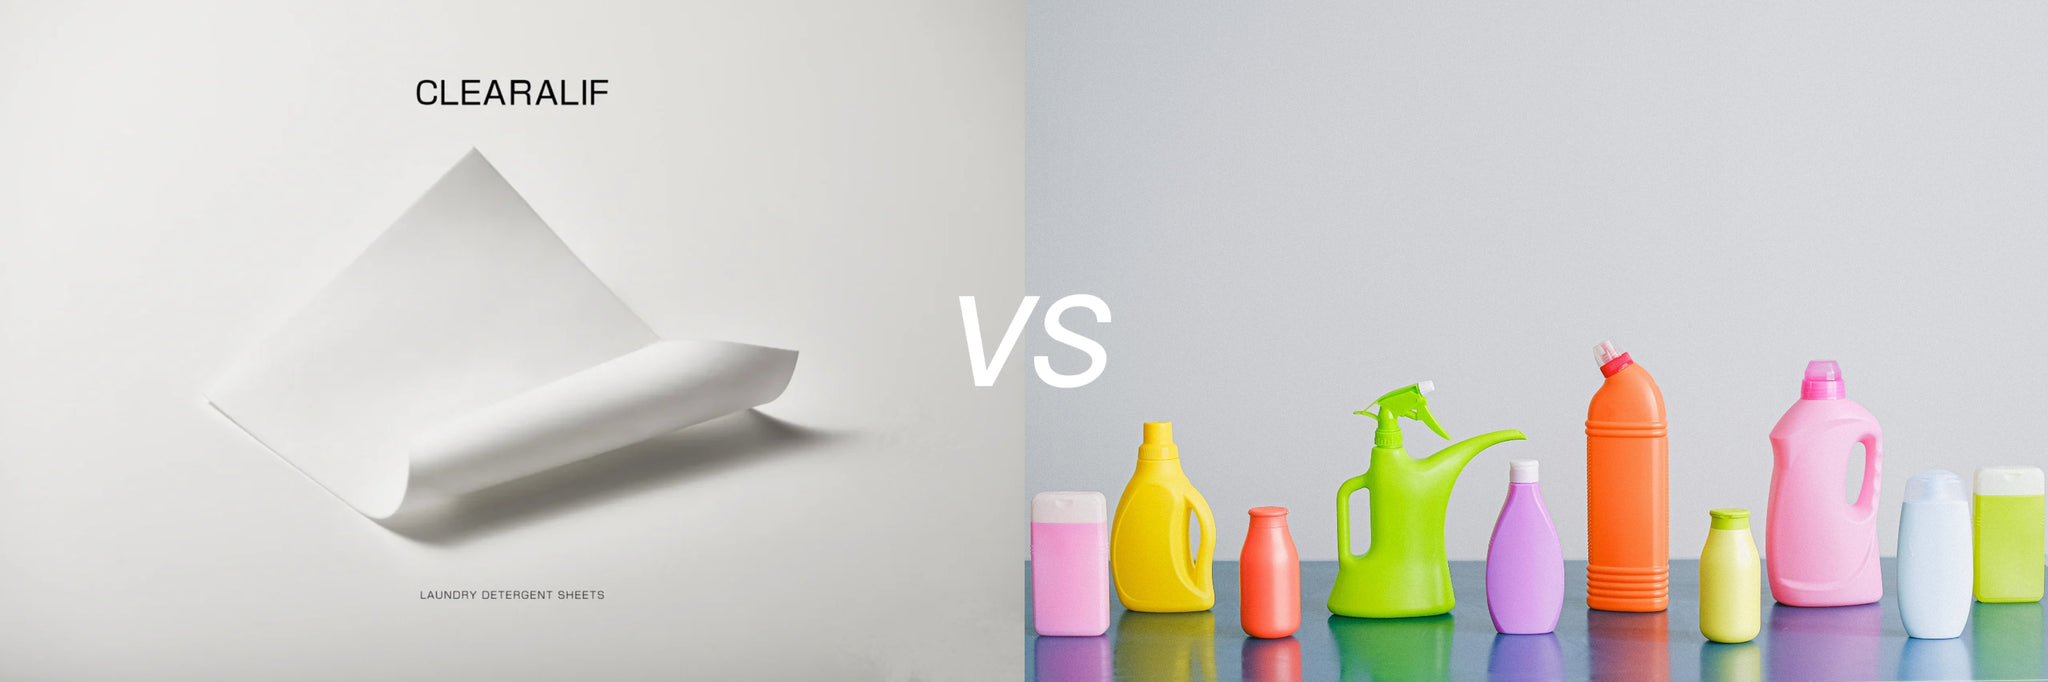 Eco laundry detergent sheets vs Standard Detergent of Plastic Jugs